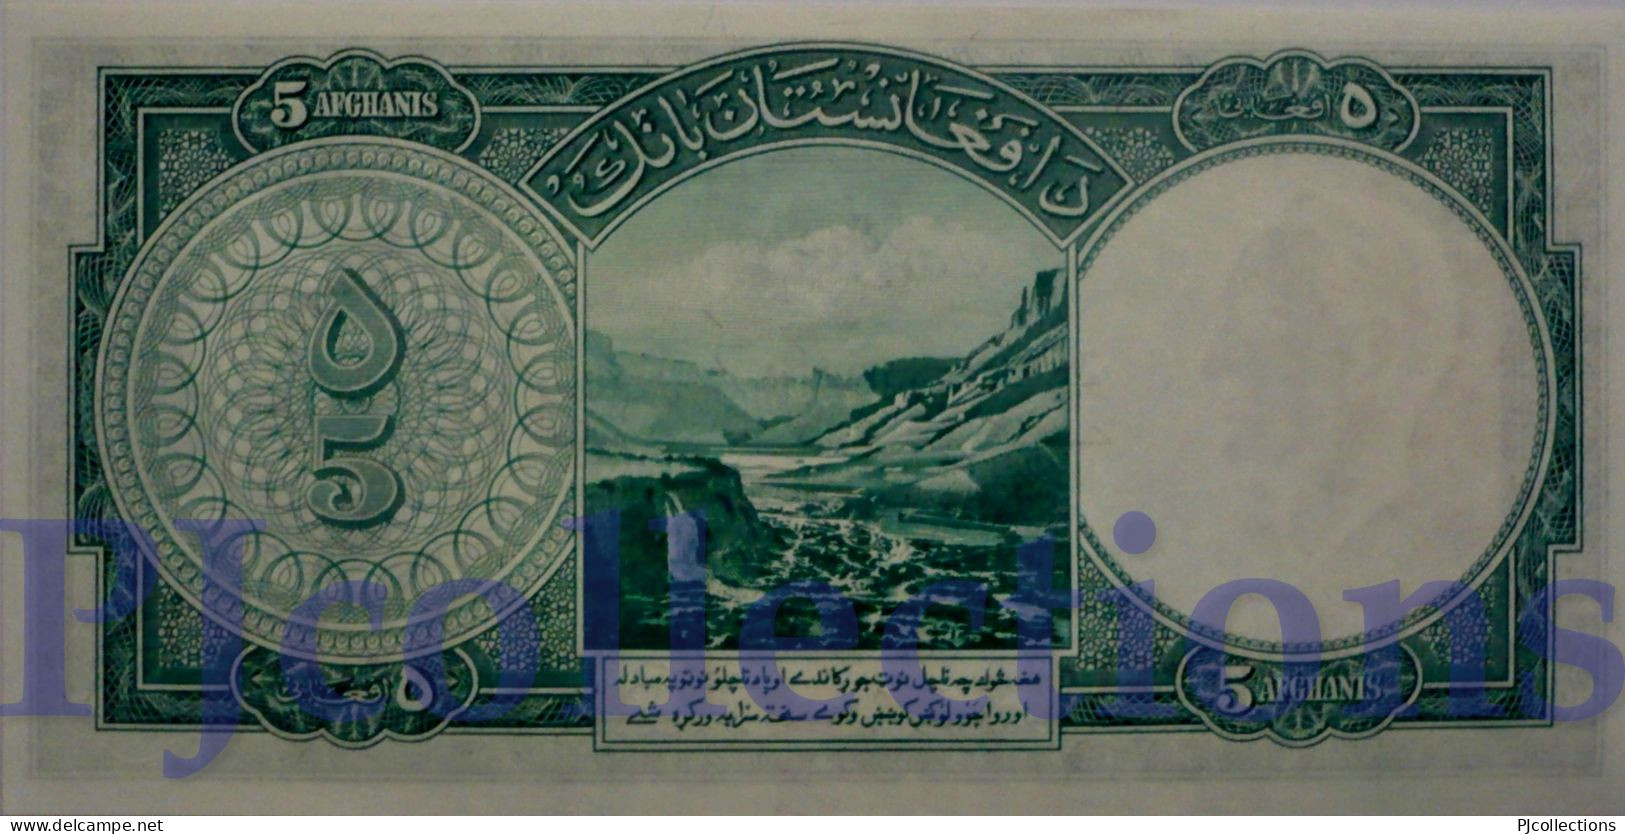 AFGHANISTAN 5 AFGHANIS 1939 PICK 22 UNC - Afghanistán